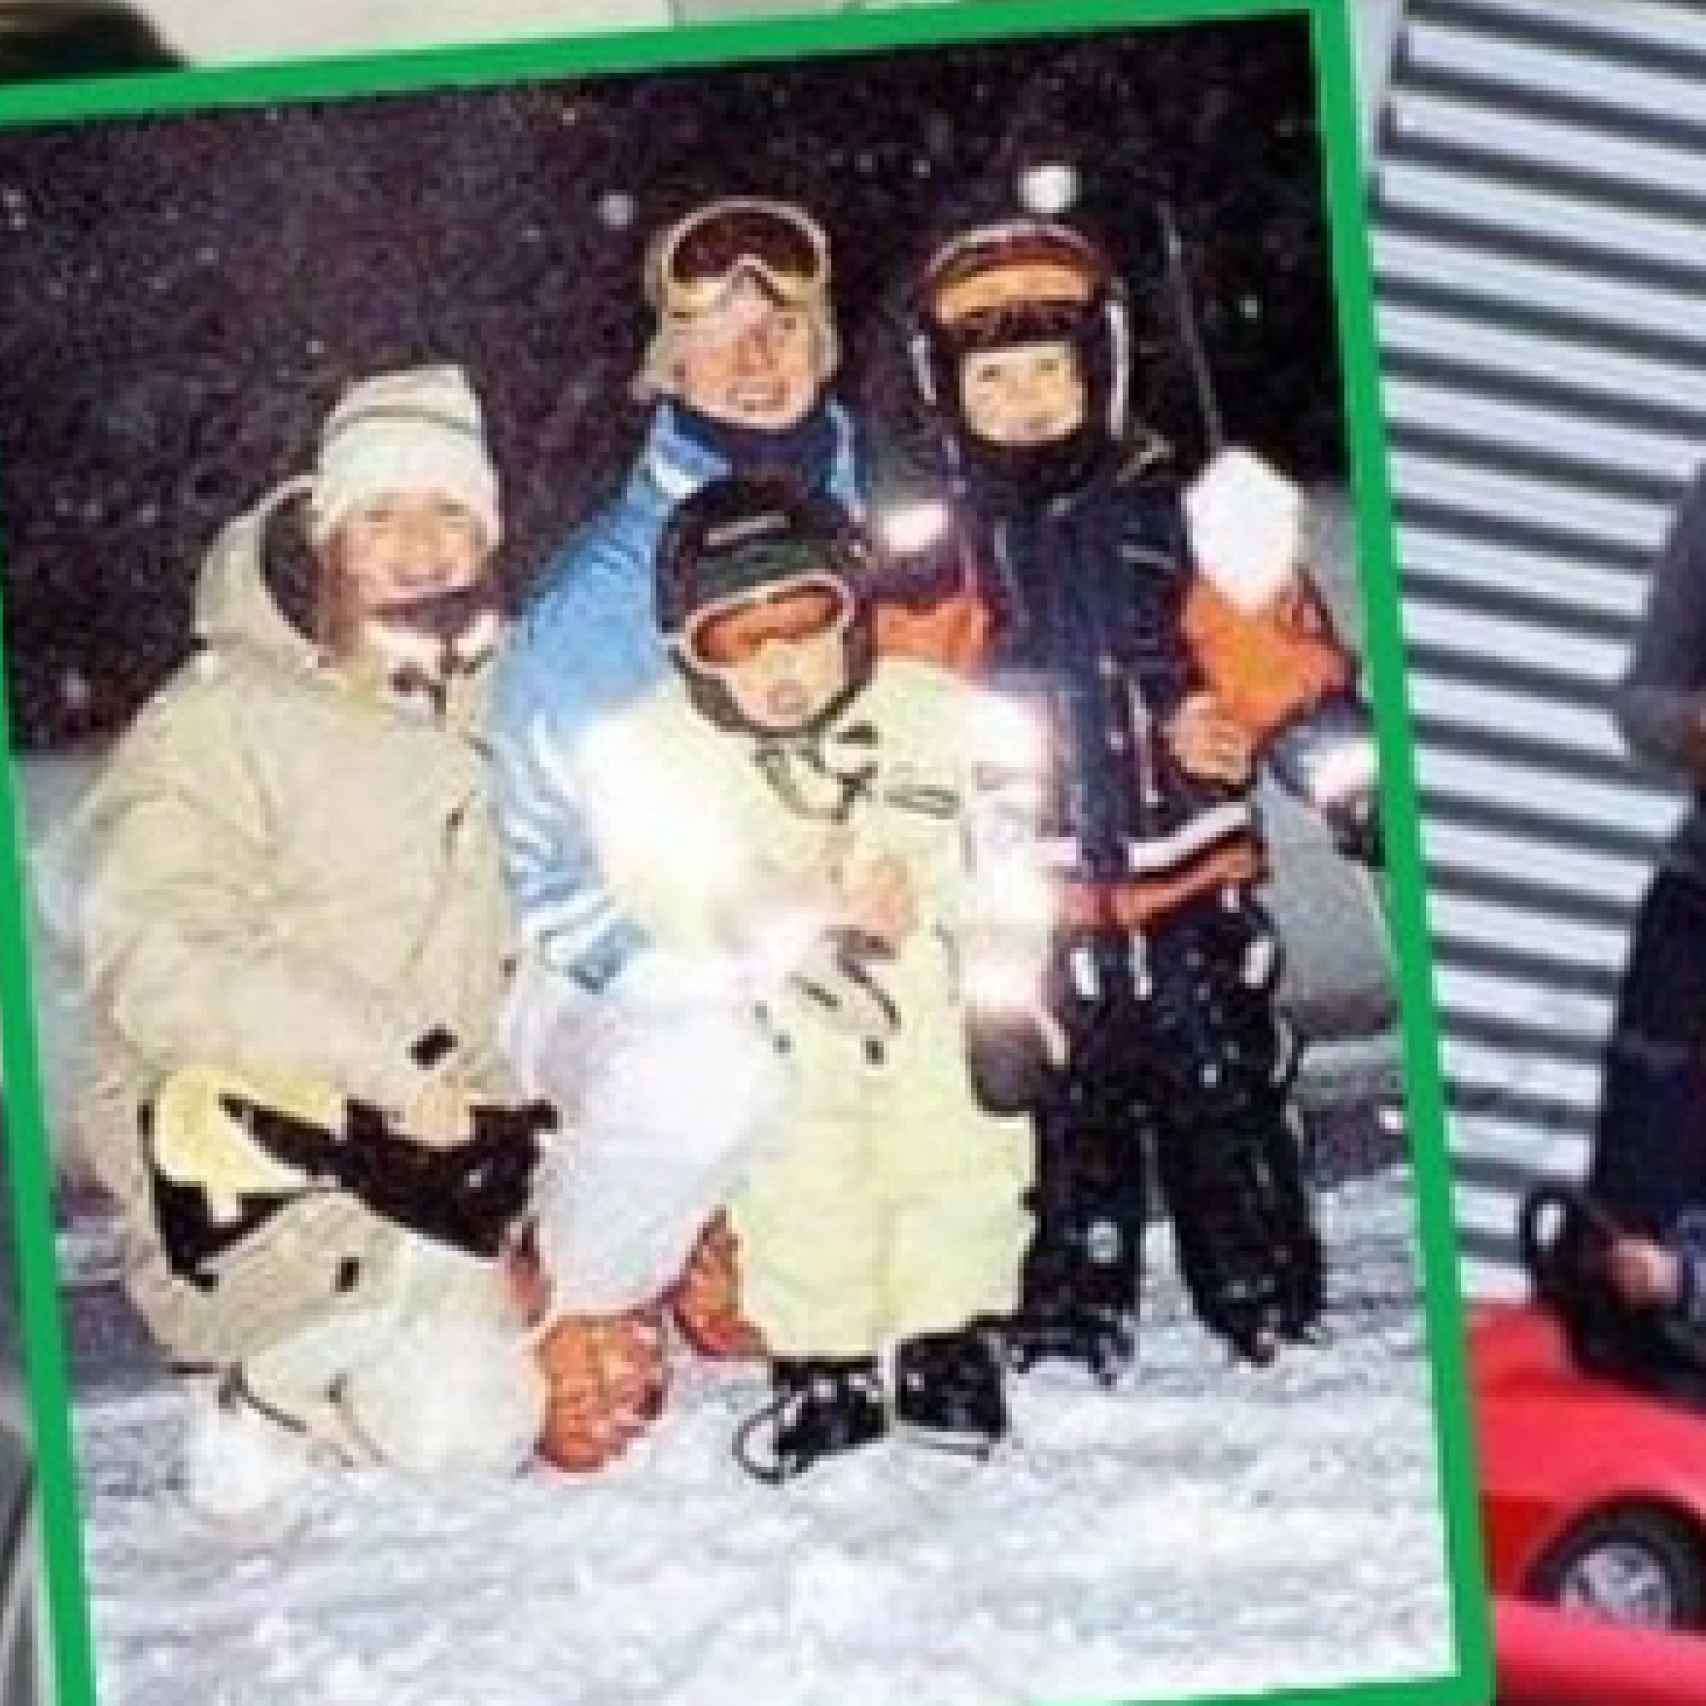 La familia Schumacher era muy aficionada al esquí